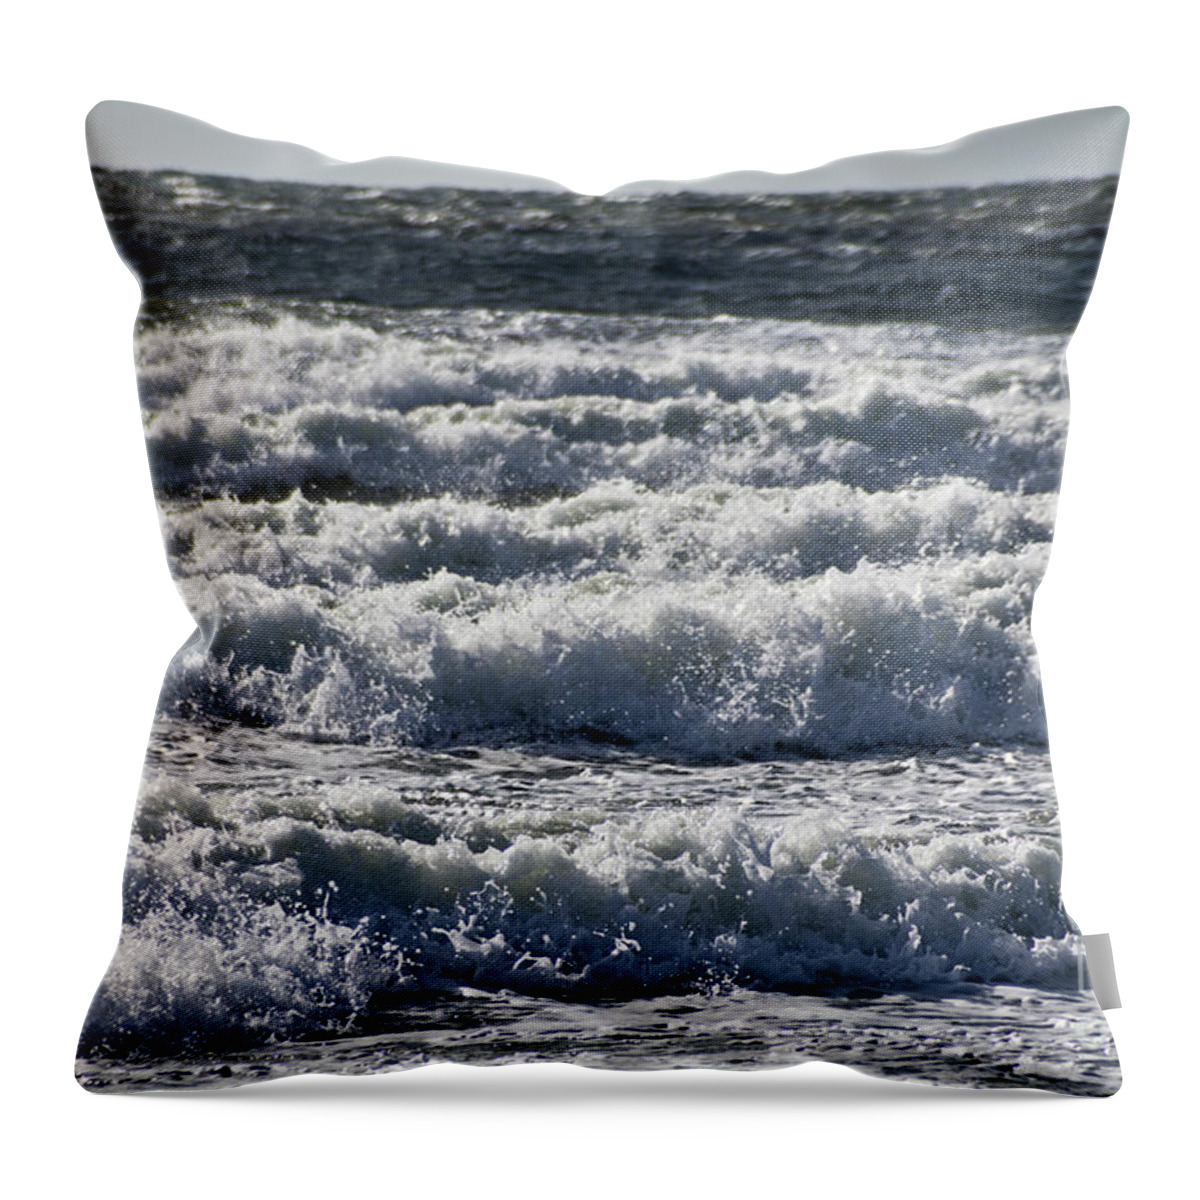 Ocean Throw Pillow featuring the digital art A Roil Mess by Scott Evers